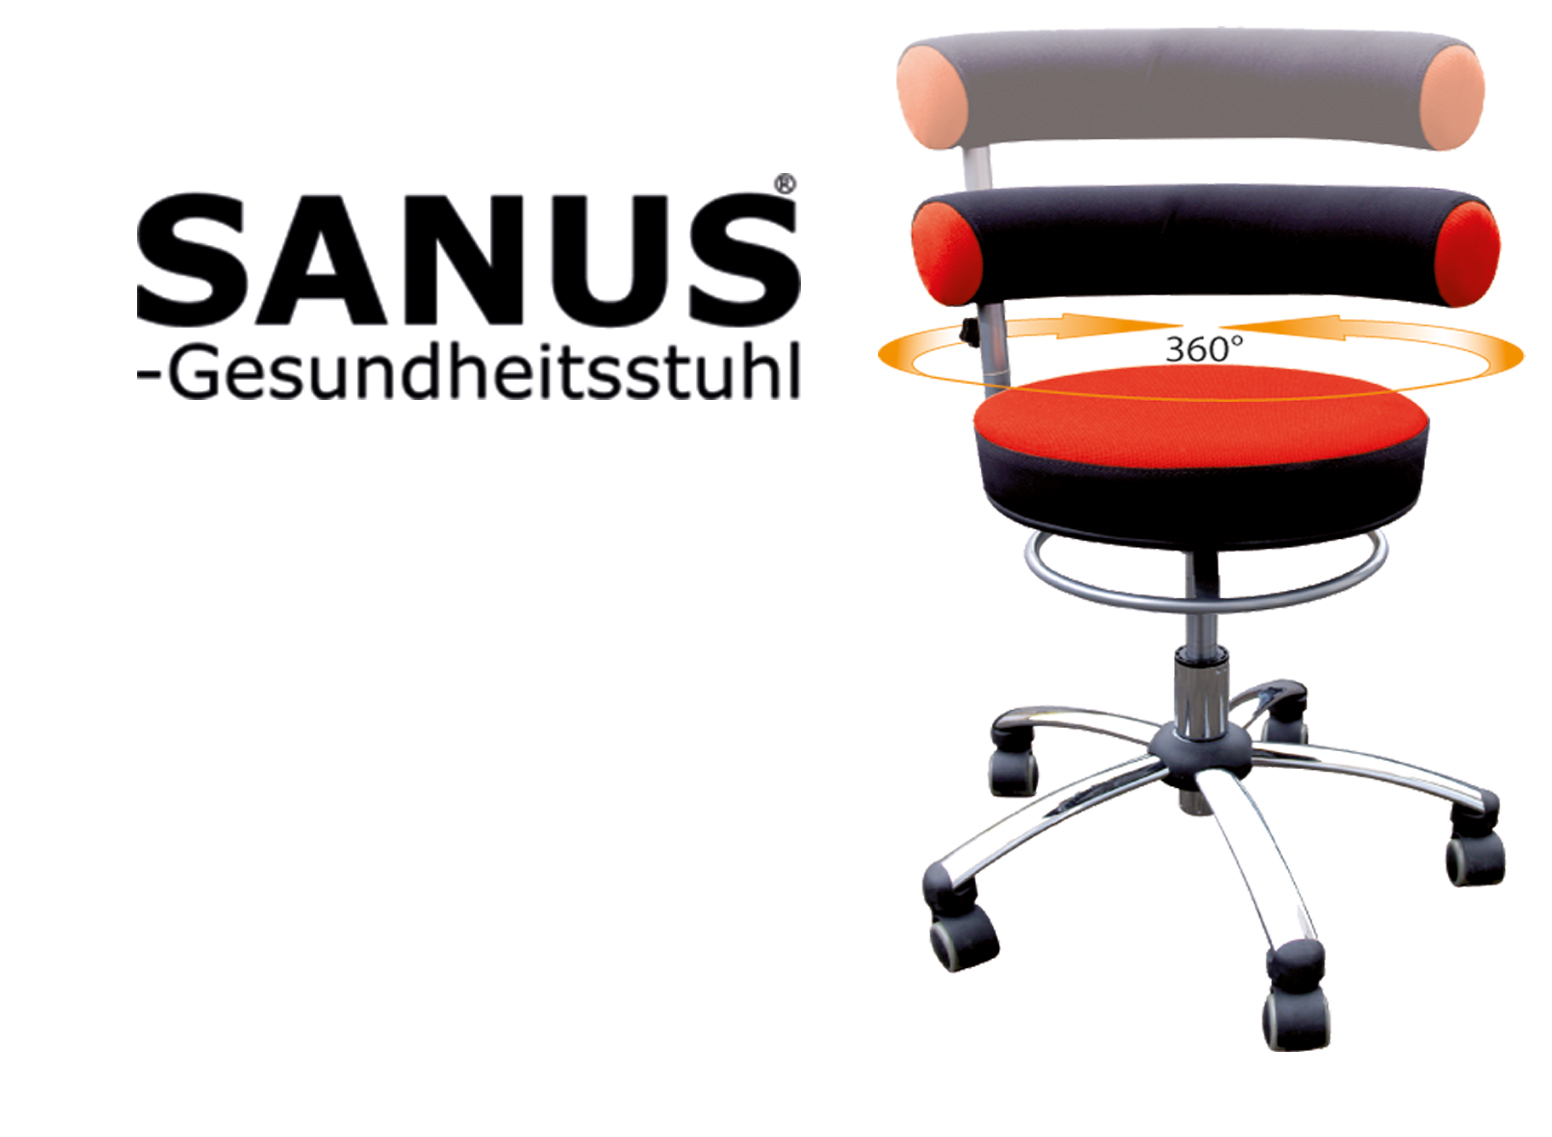 SANUS Gesundheitsstuhl "Comfort"